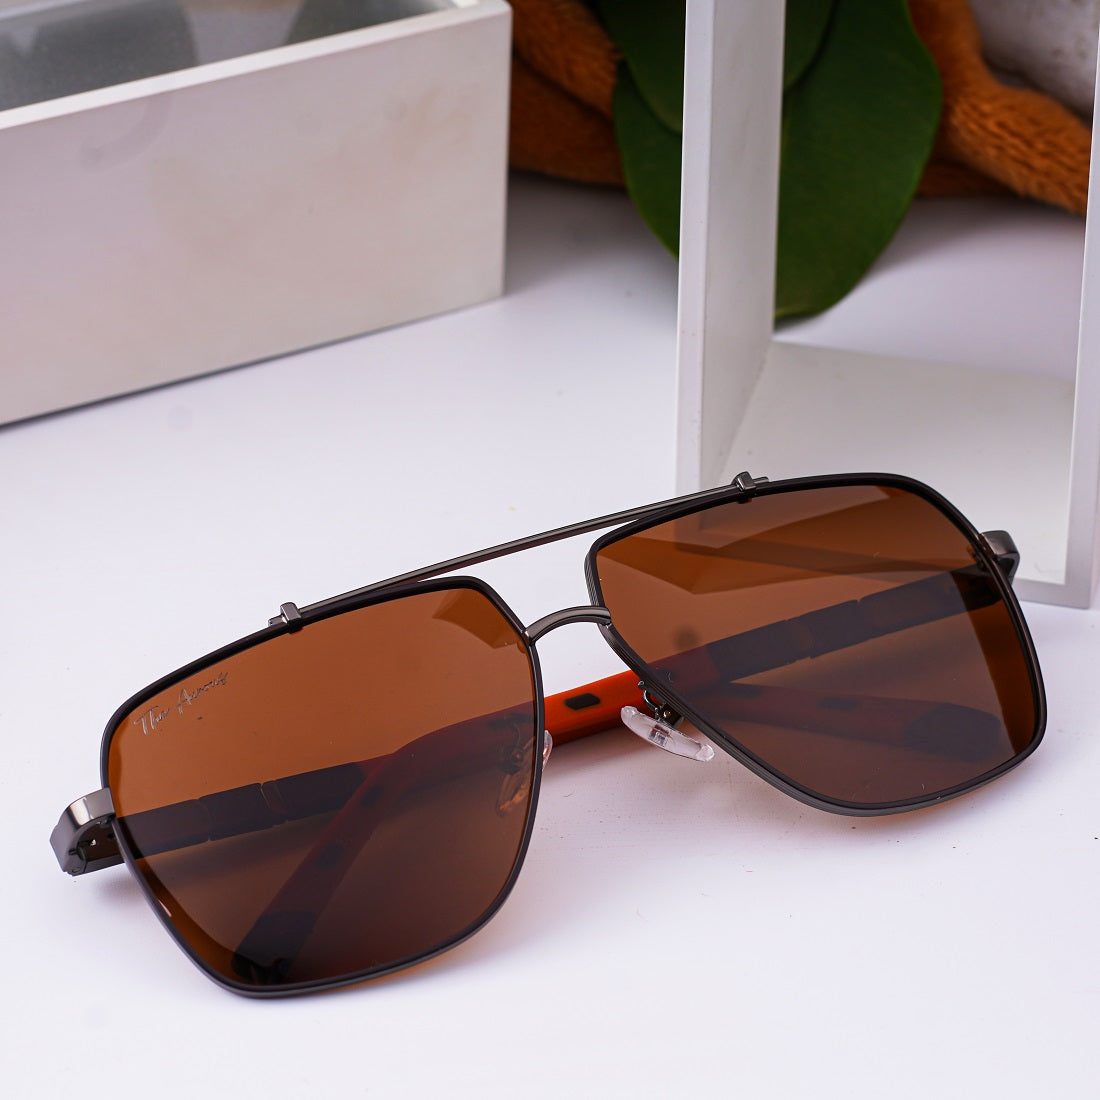 The Aurous Quad Polarized Square Sunglasses